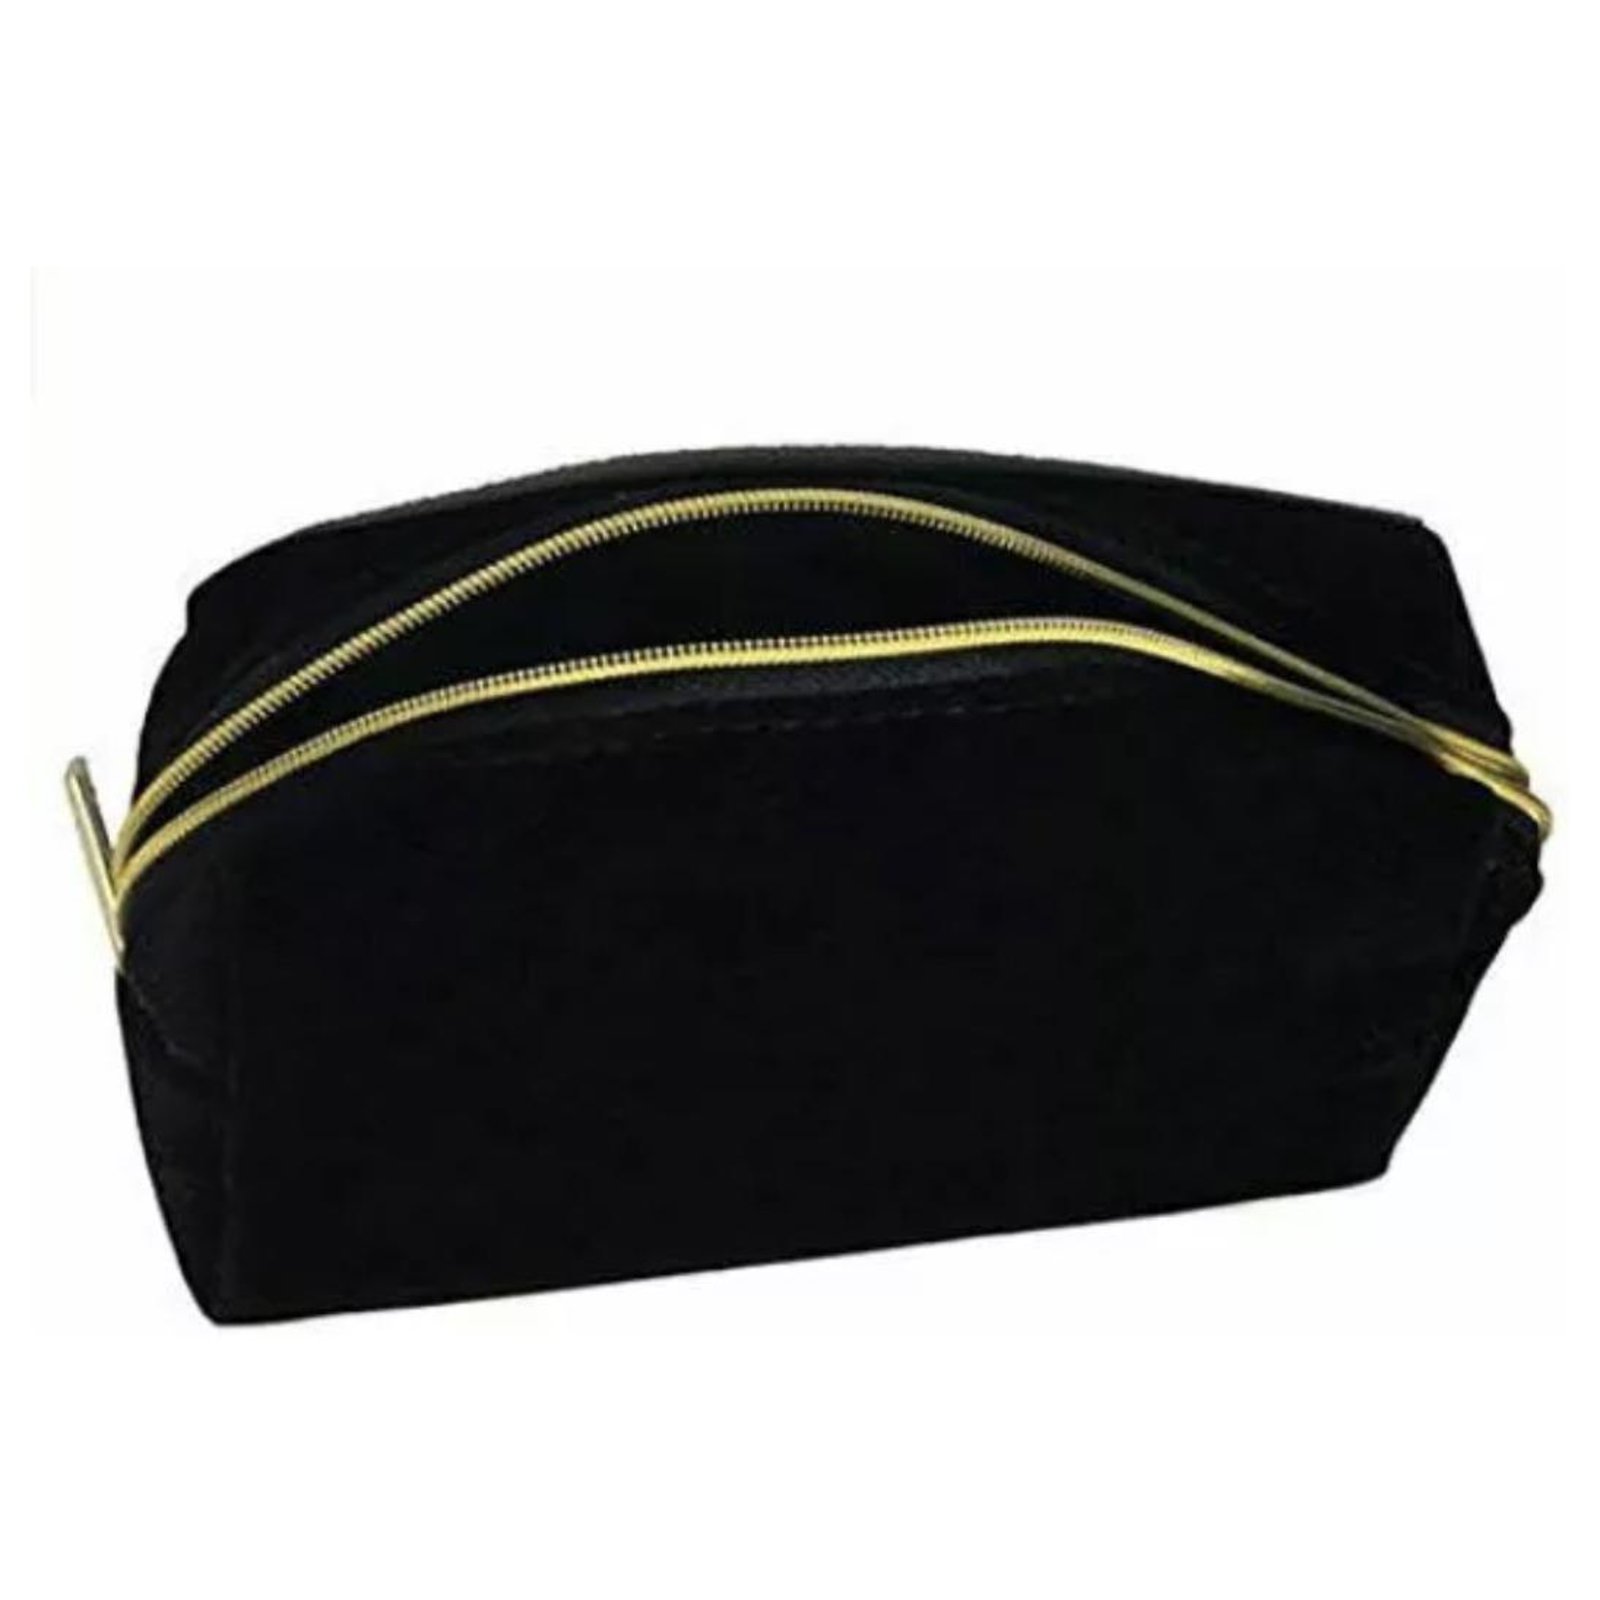 YSL YVES SAINT Laurent Beauty Black Makeup Bag Gift Set Brand New £18.99 -  PicClick UK